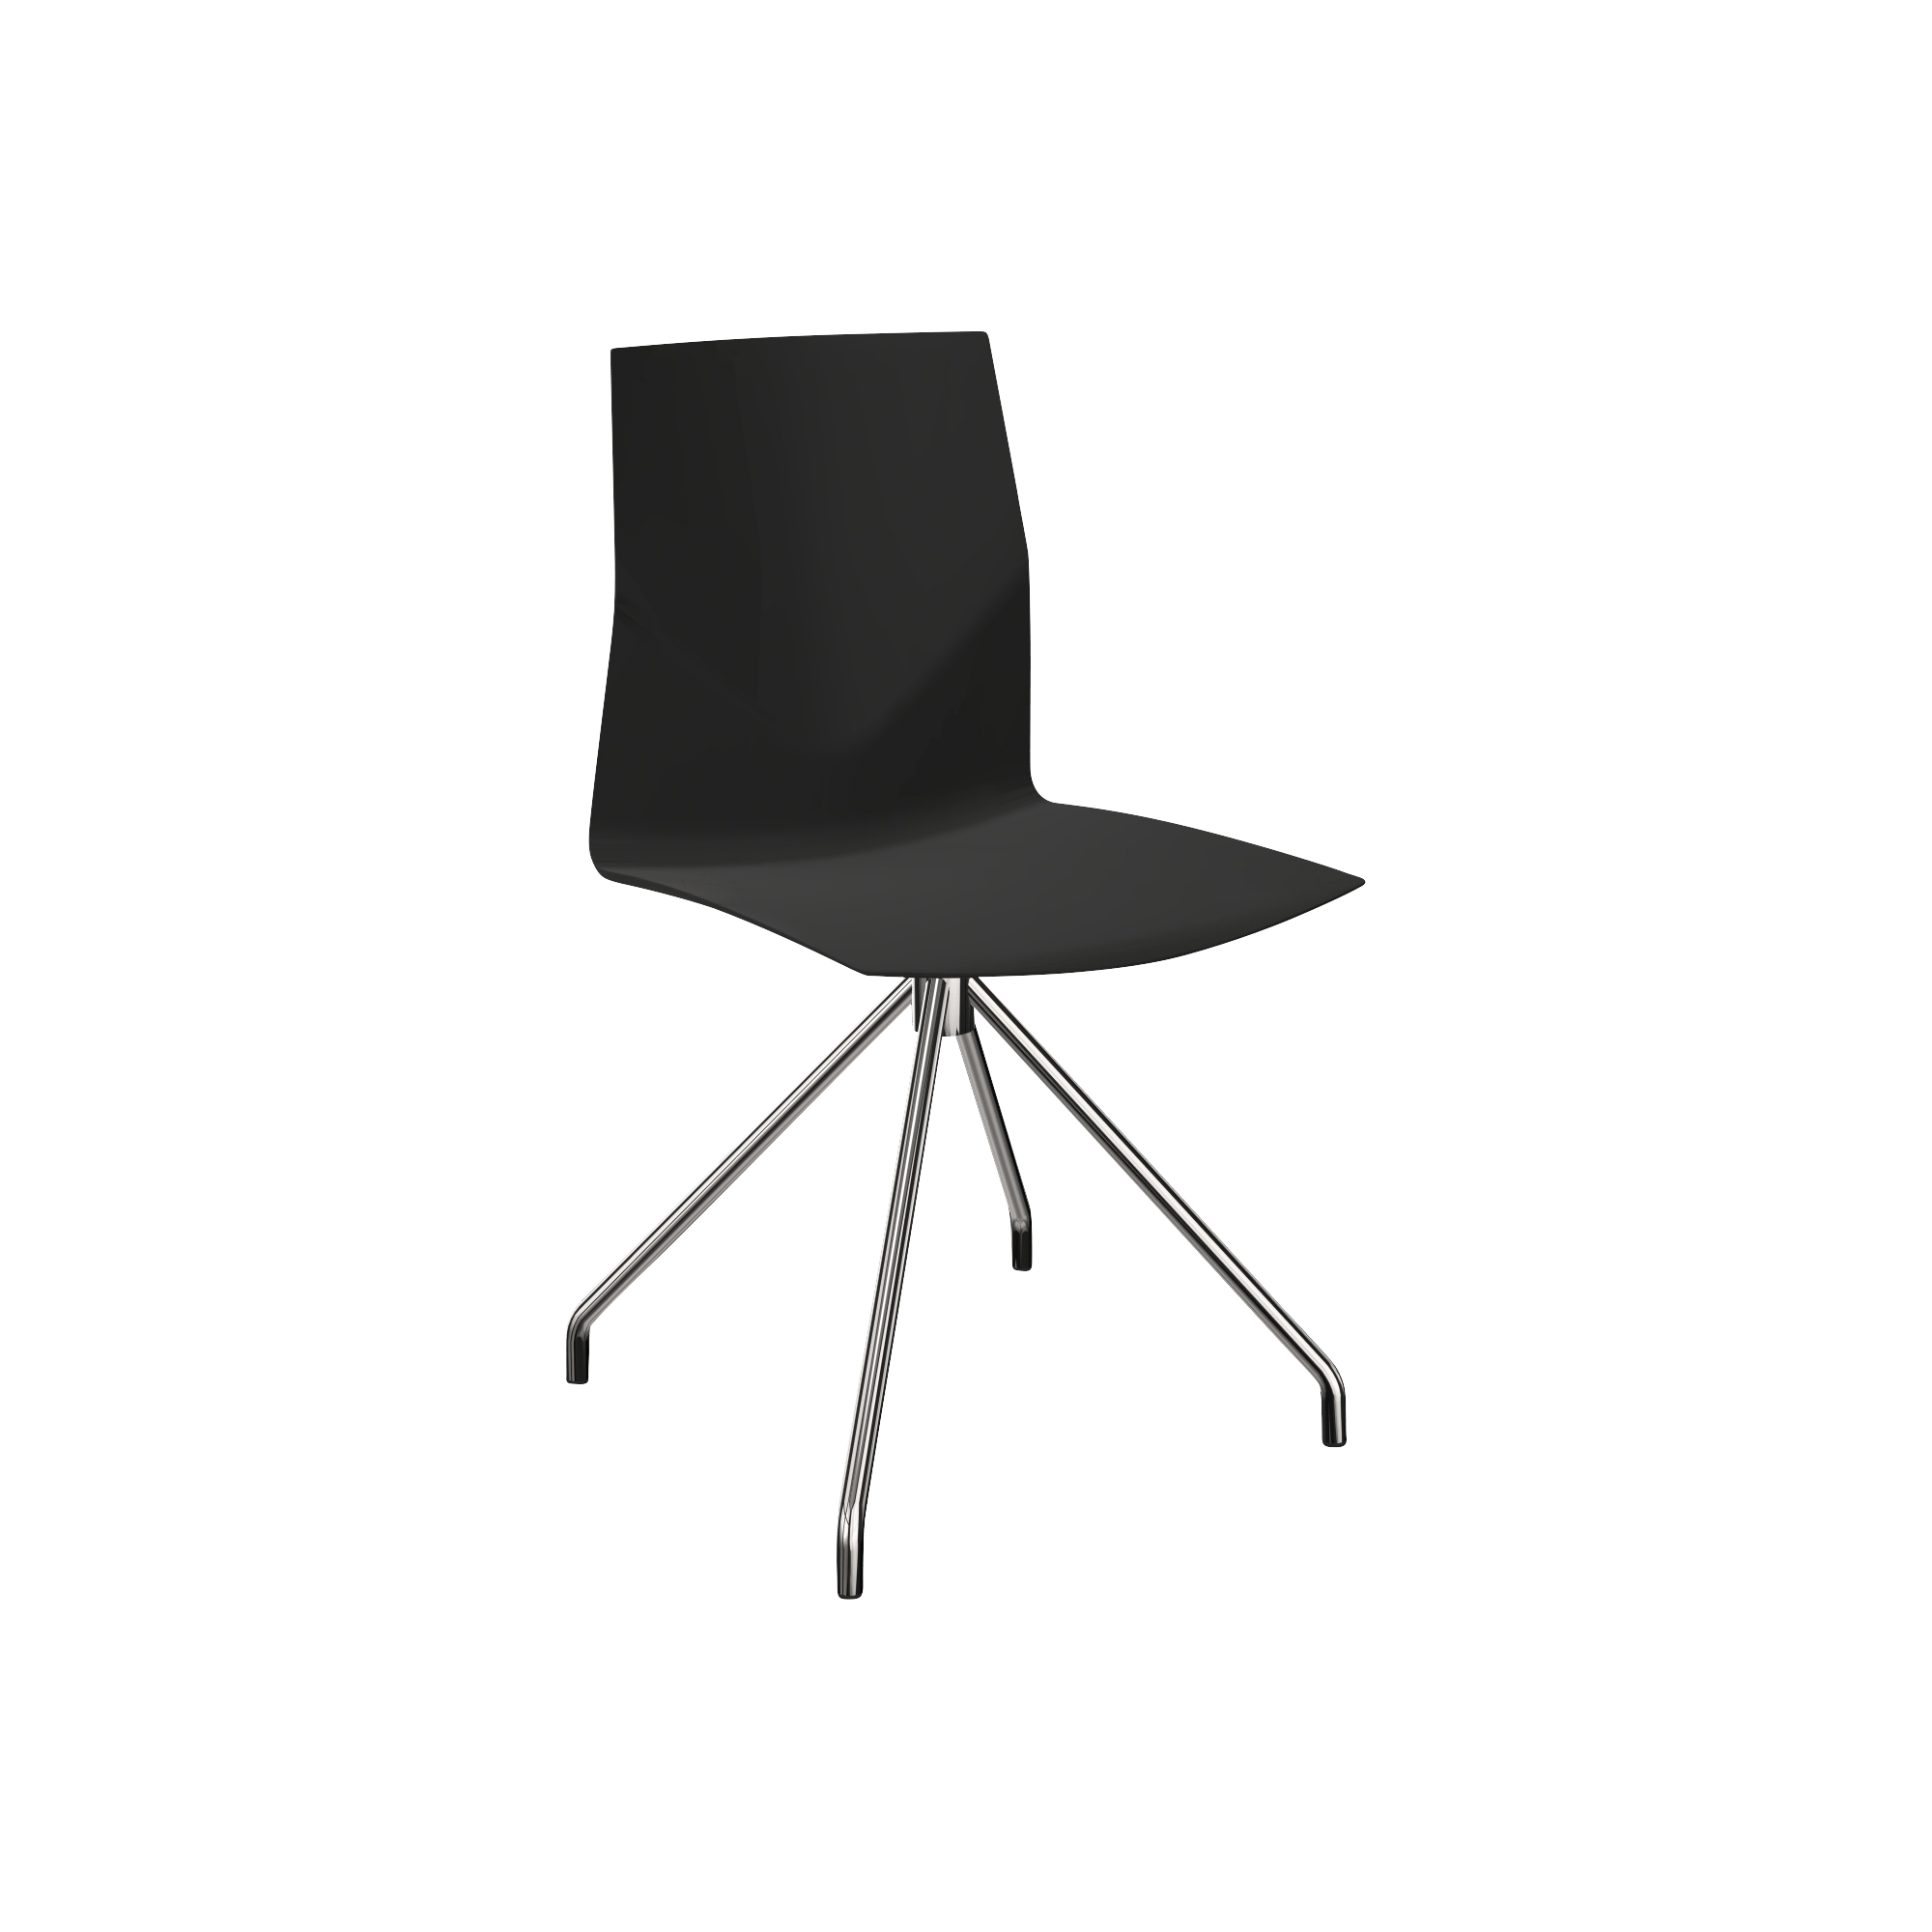 Black seat with chrome leg